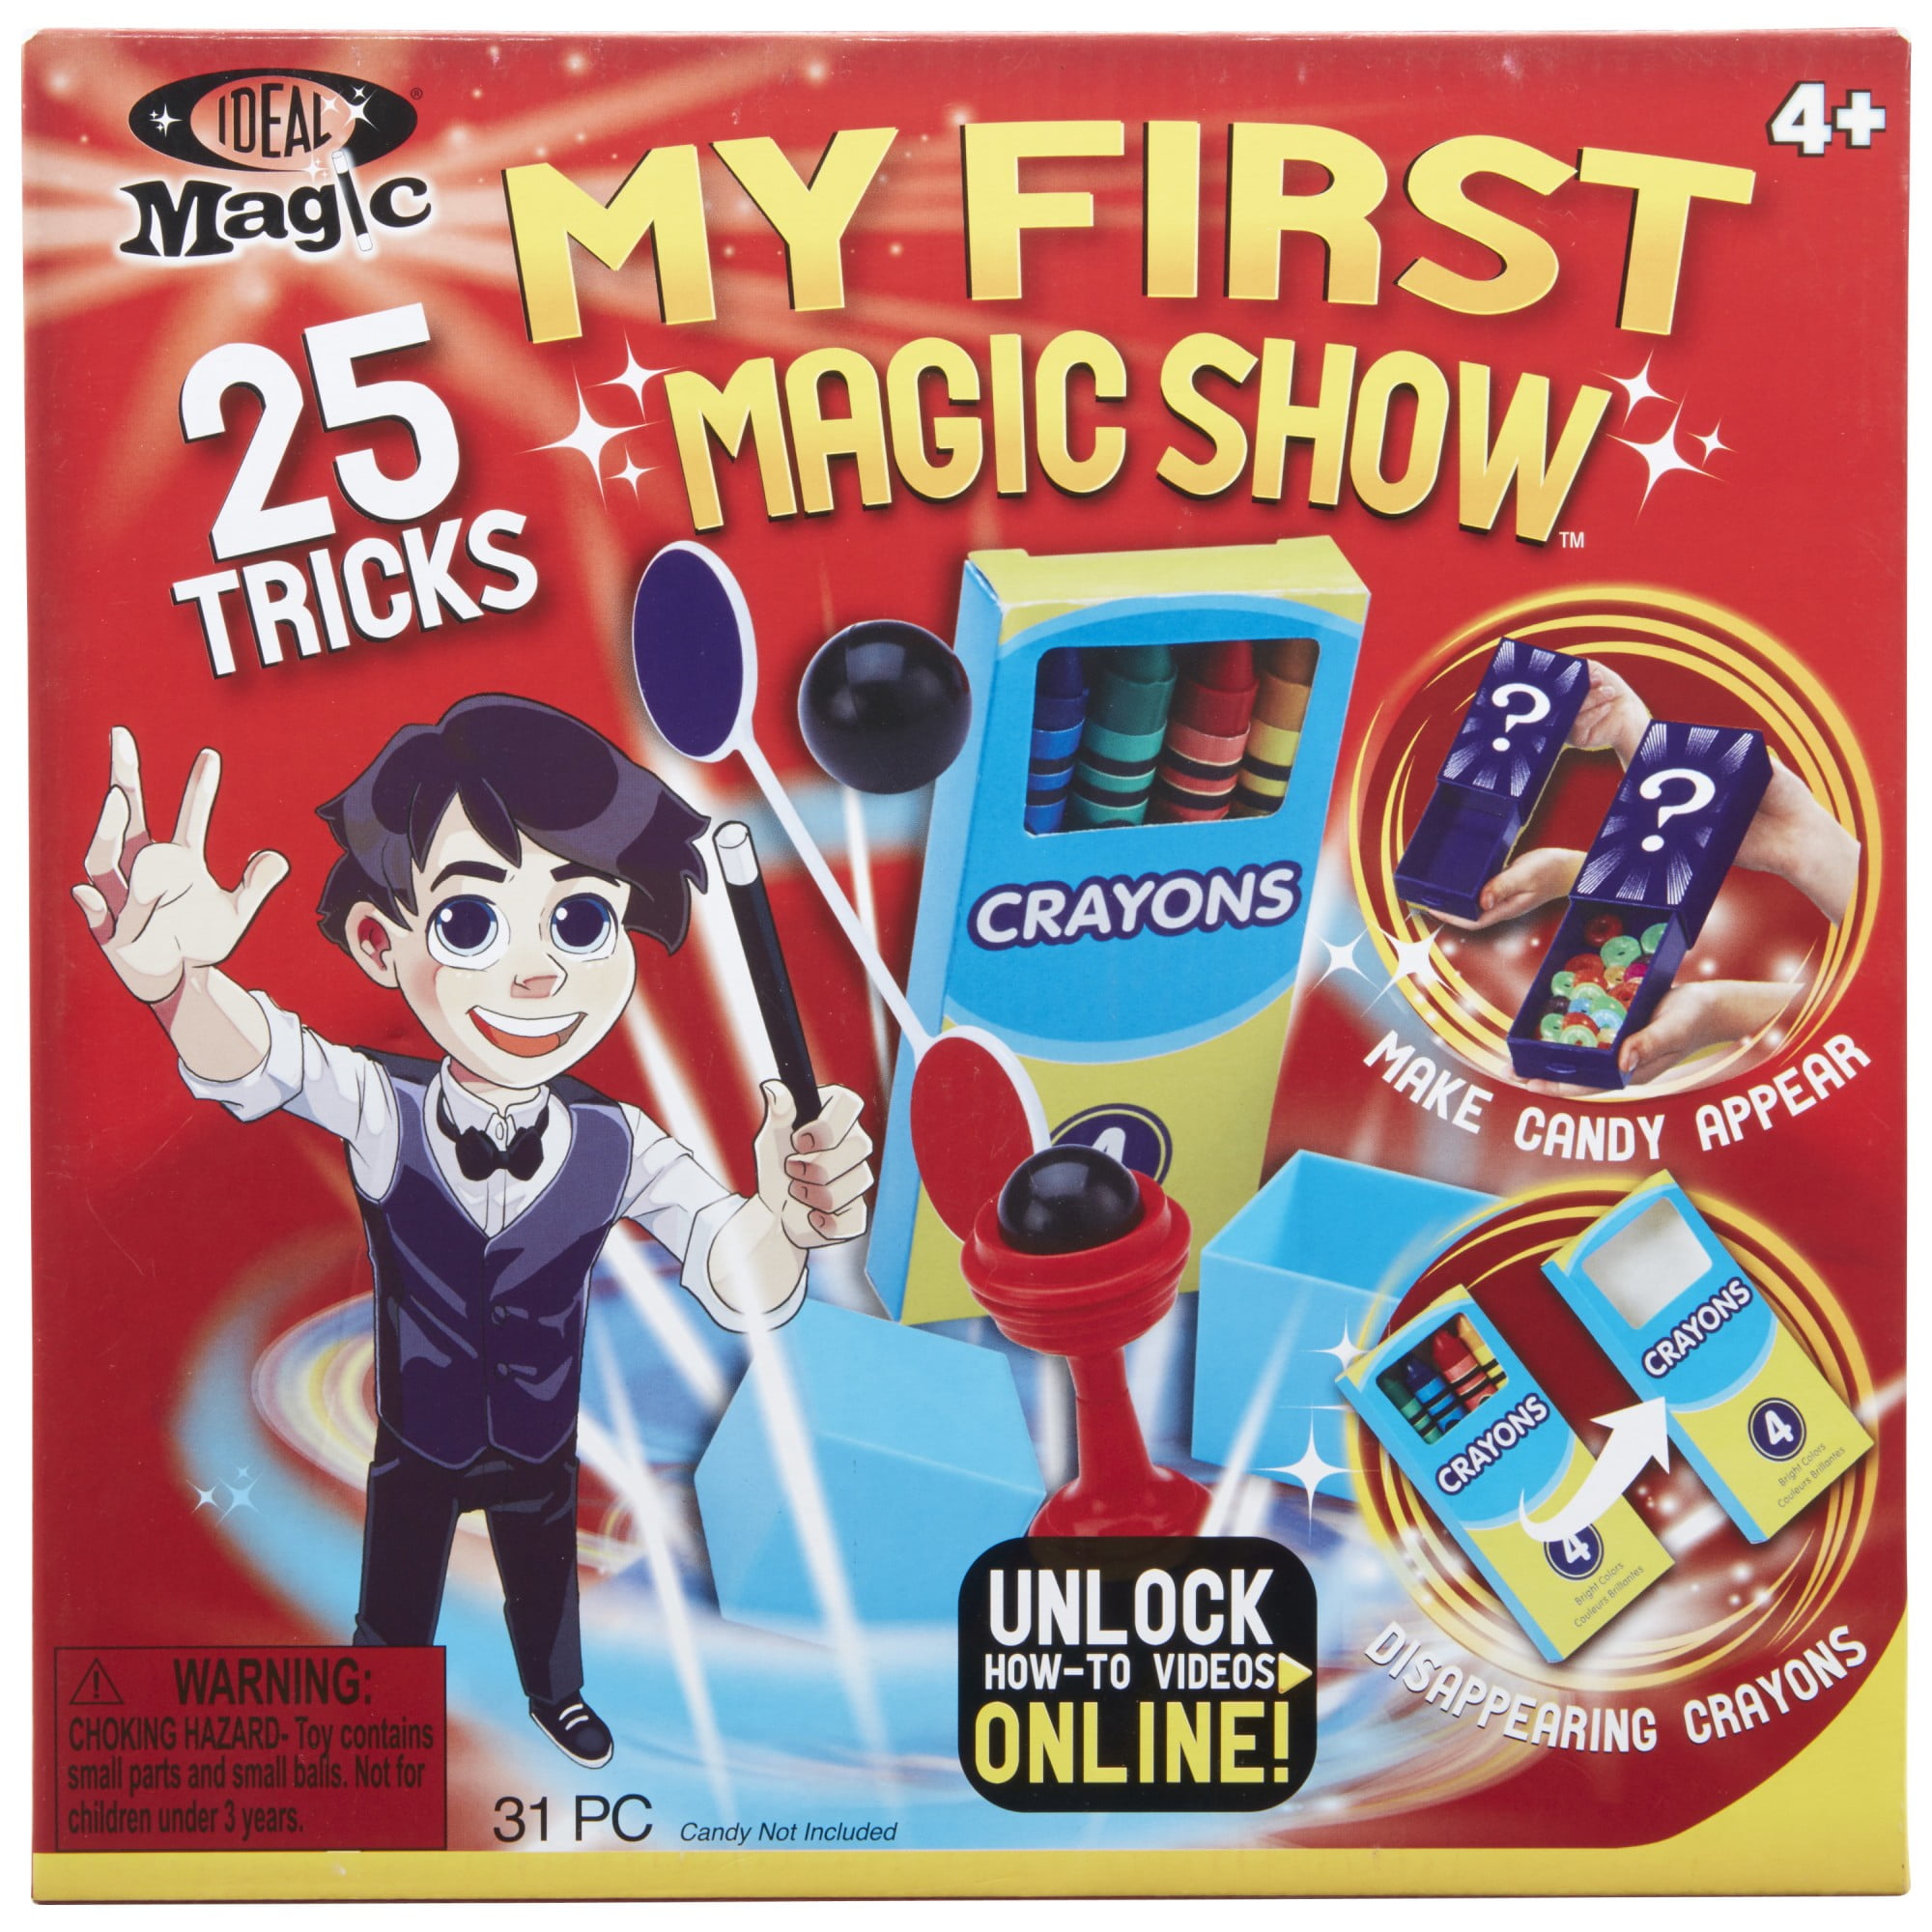 SpiceBox Children's Activity Kits for Kids Amazing Magic Tricks 